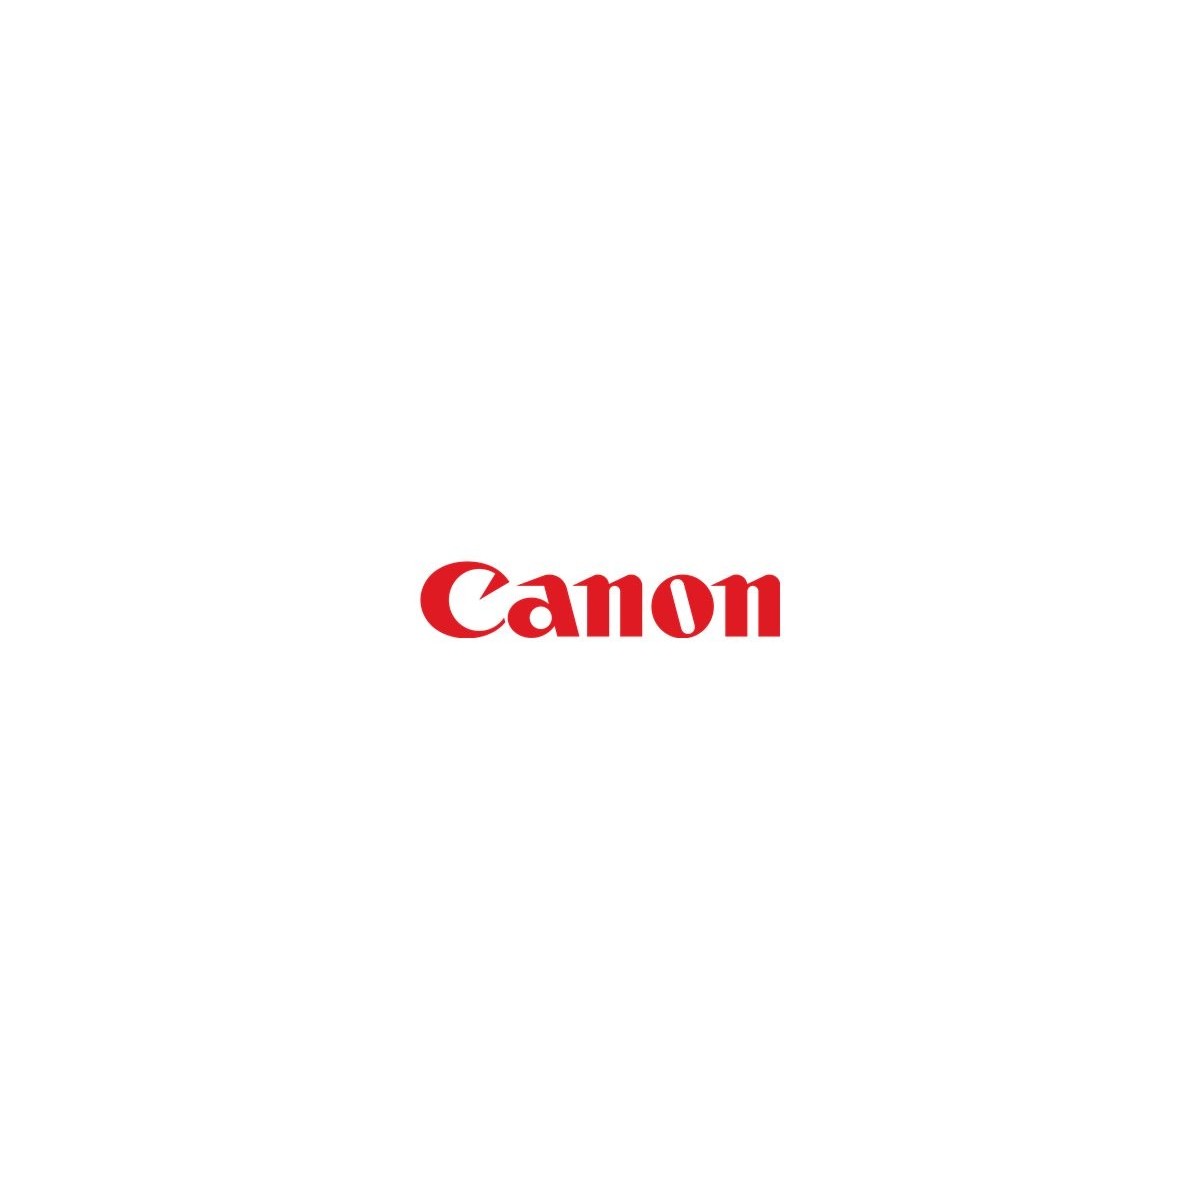 Canon RH2-28 - Roll holder - Black - Blue - Stainless steel - 1 pc(s)